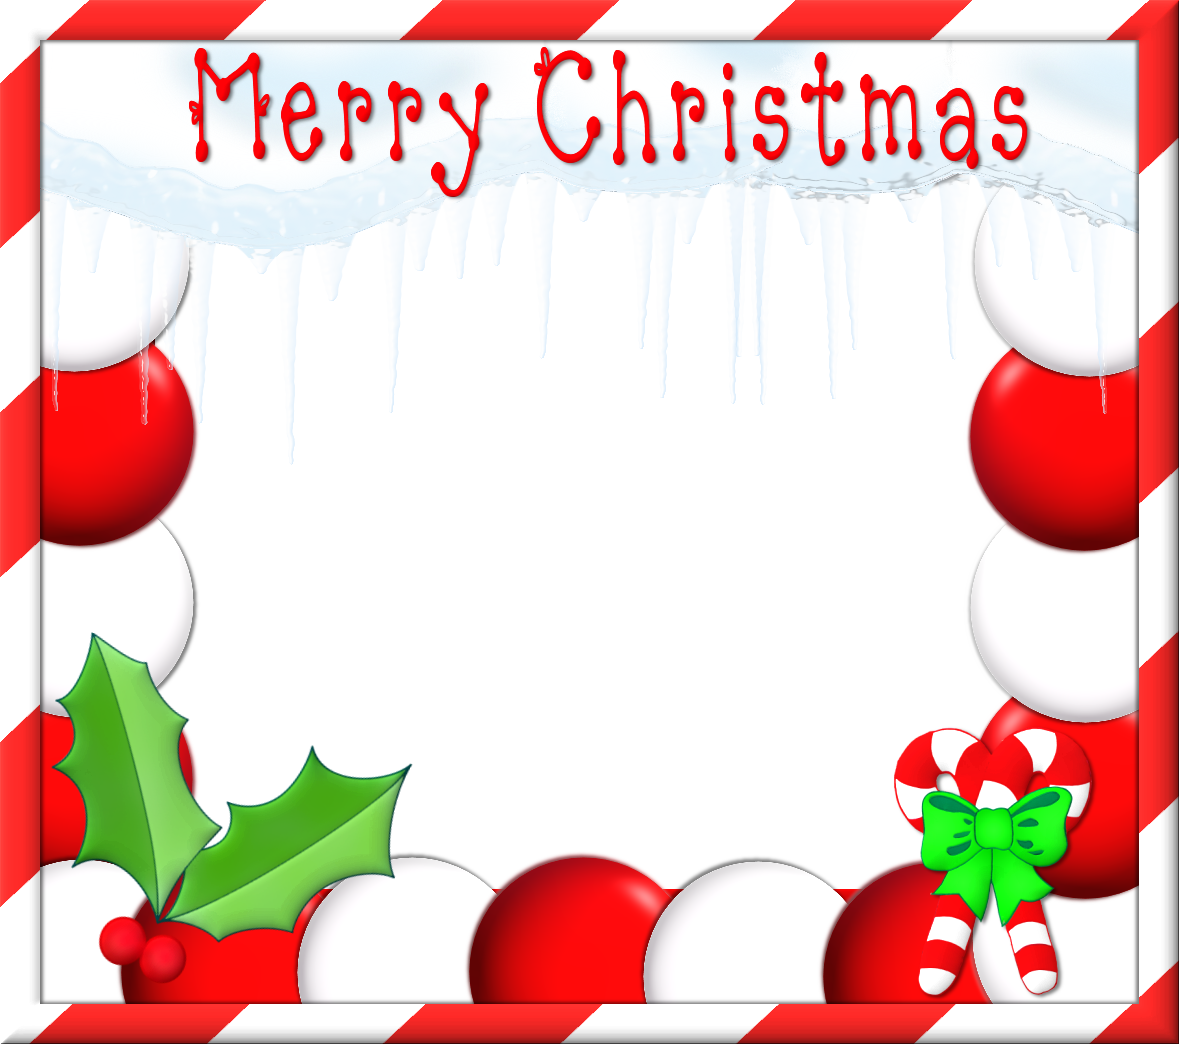 Free Christmas Frame Transparent Background, Download Free Clip Art, Free Clip Art on Clipart Library